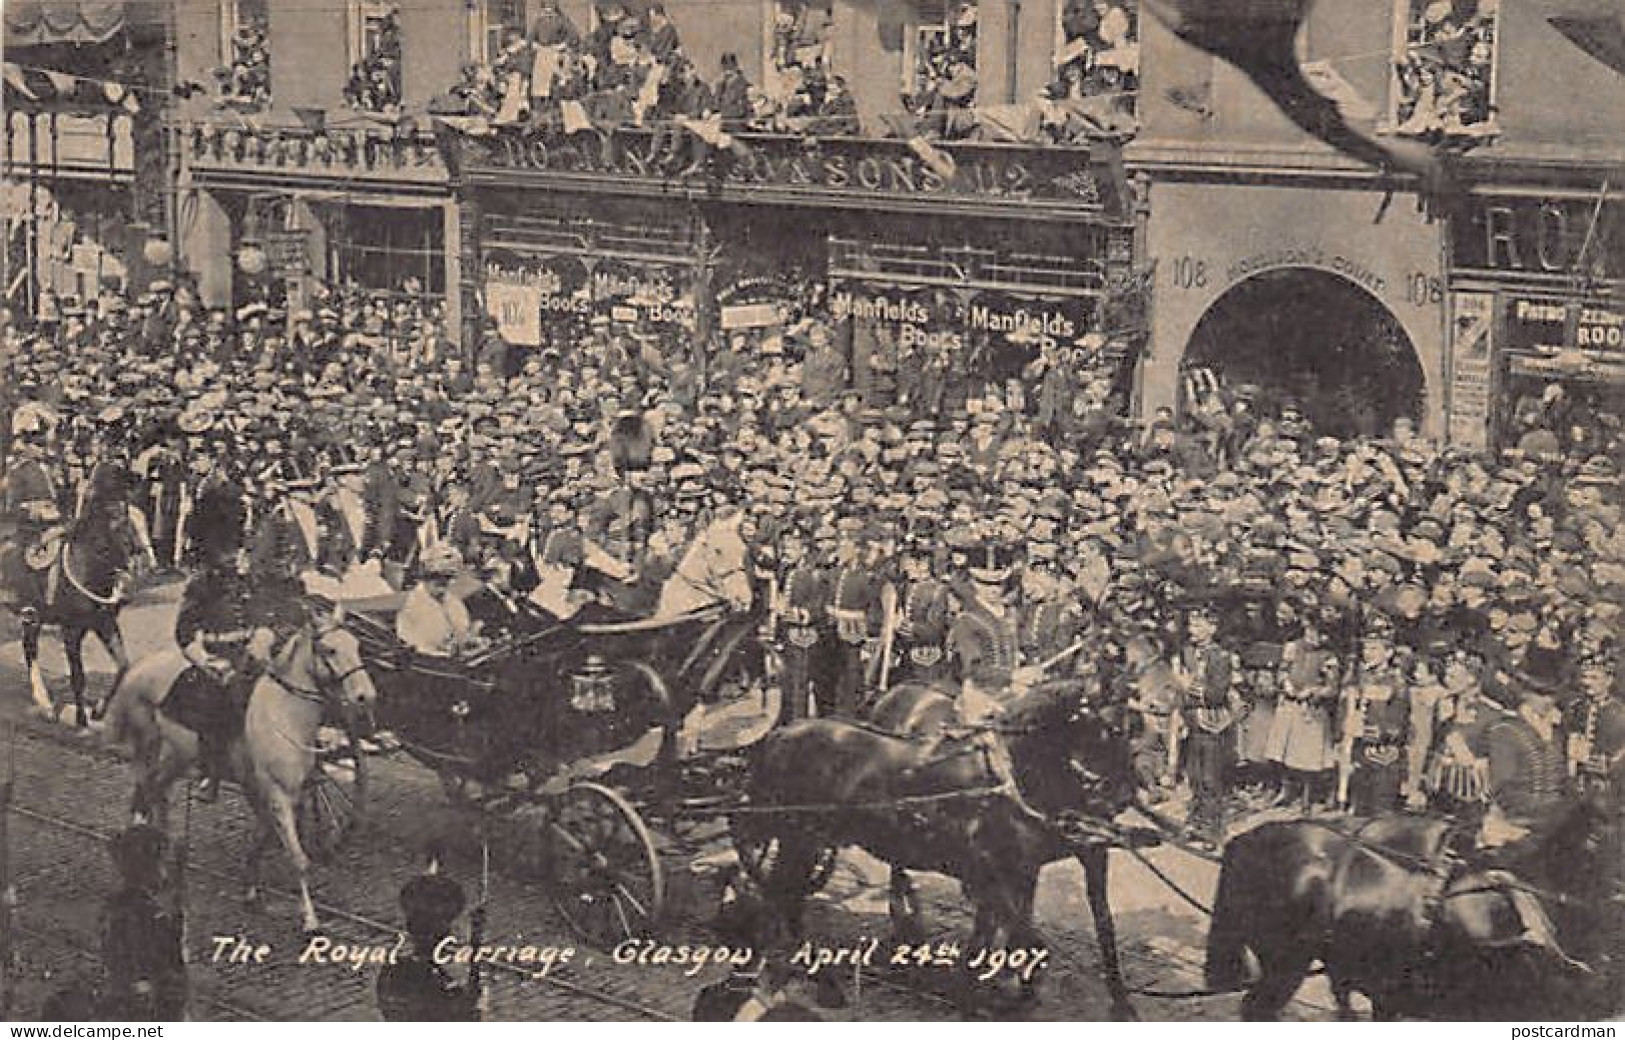 Scotland - Lanarkshire - GLASGOW, The Royal Carriage, April 24th, 1907 - Lanarkshire / Glasgow